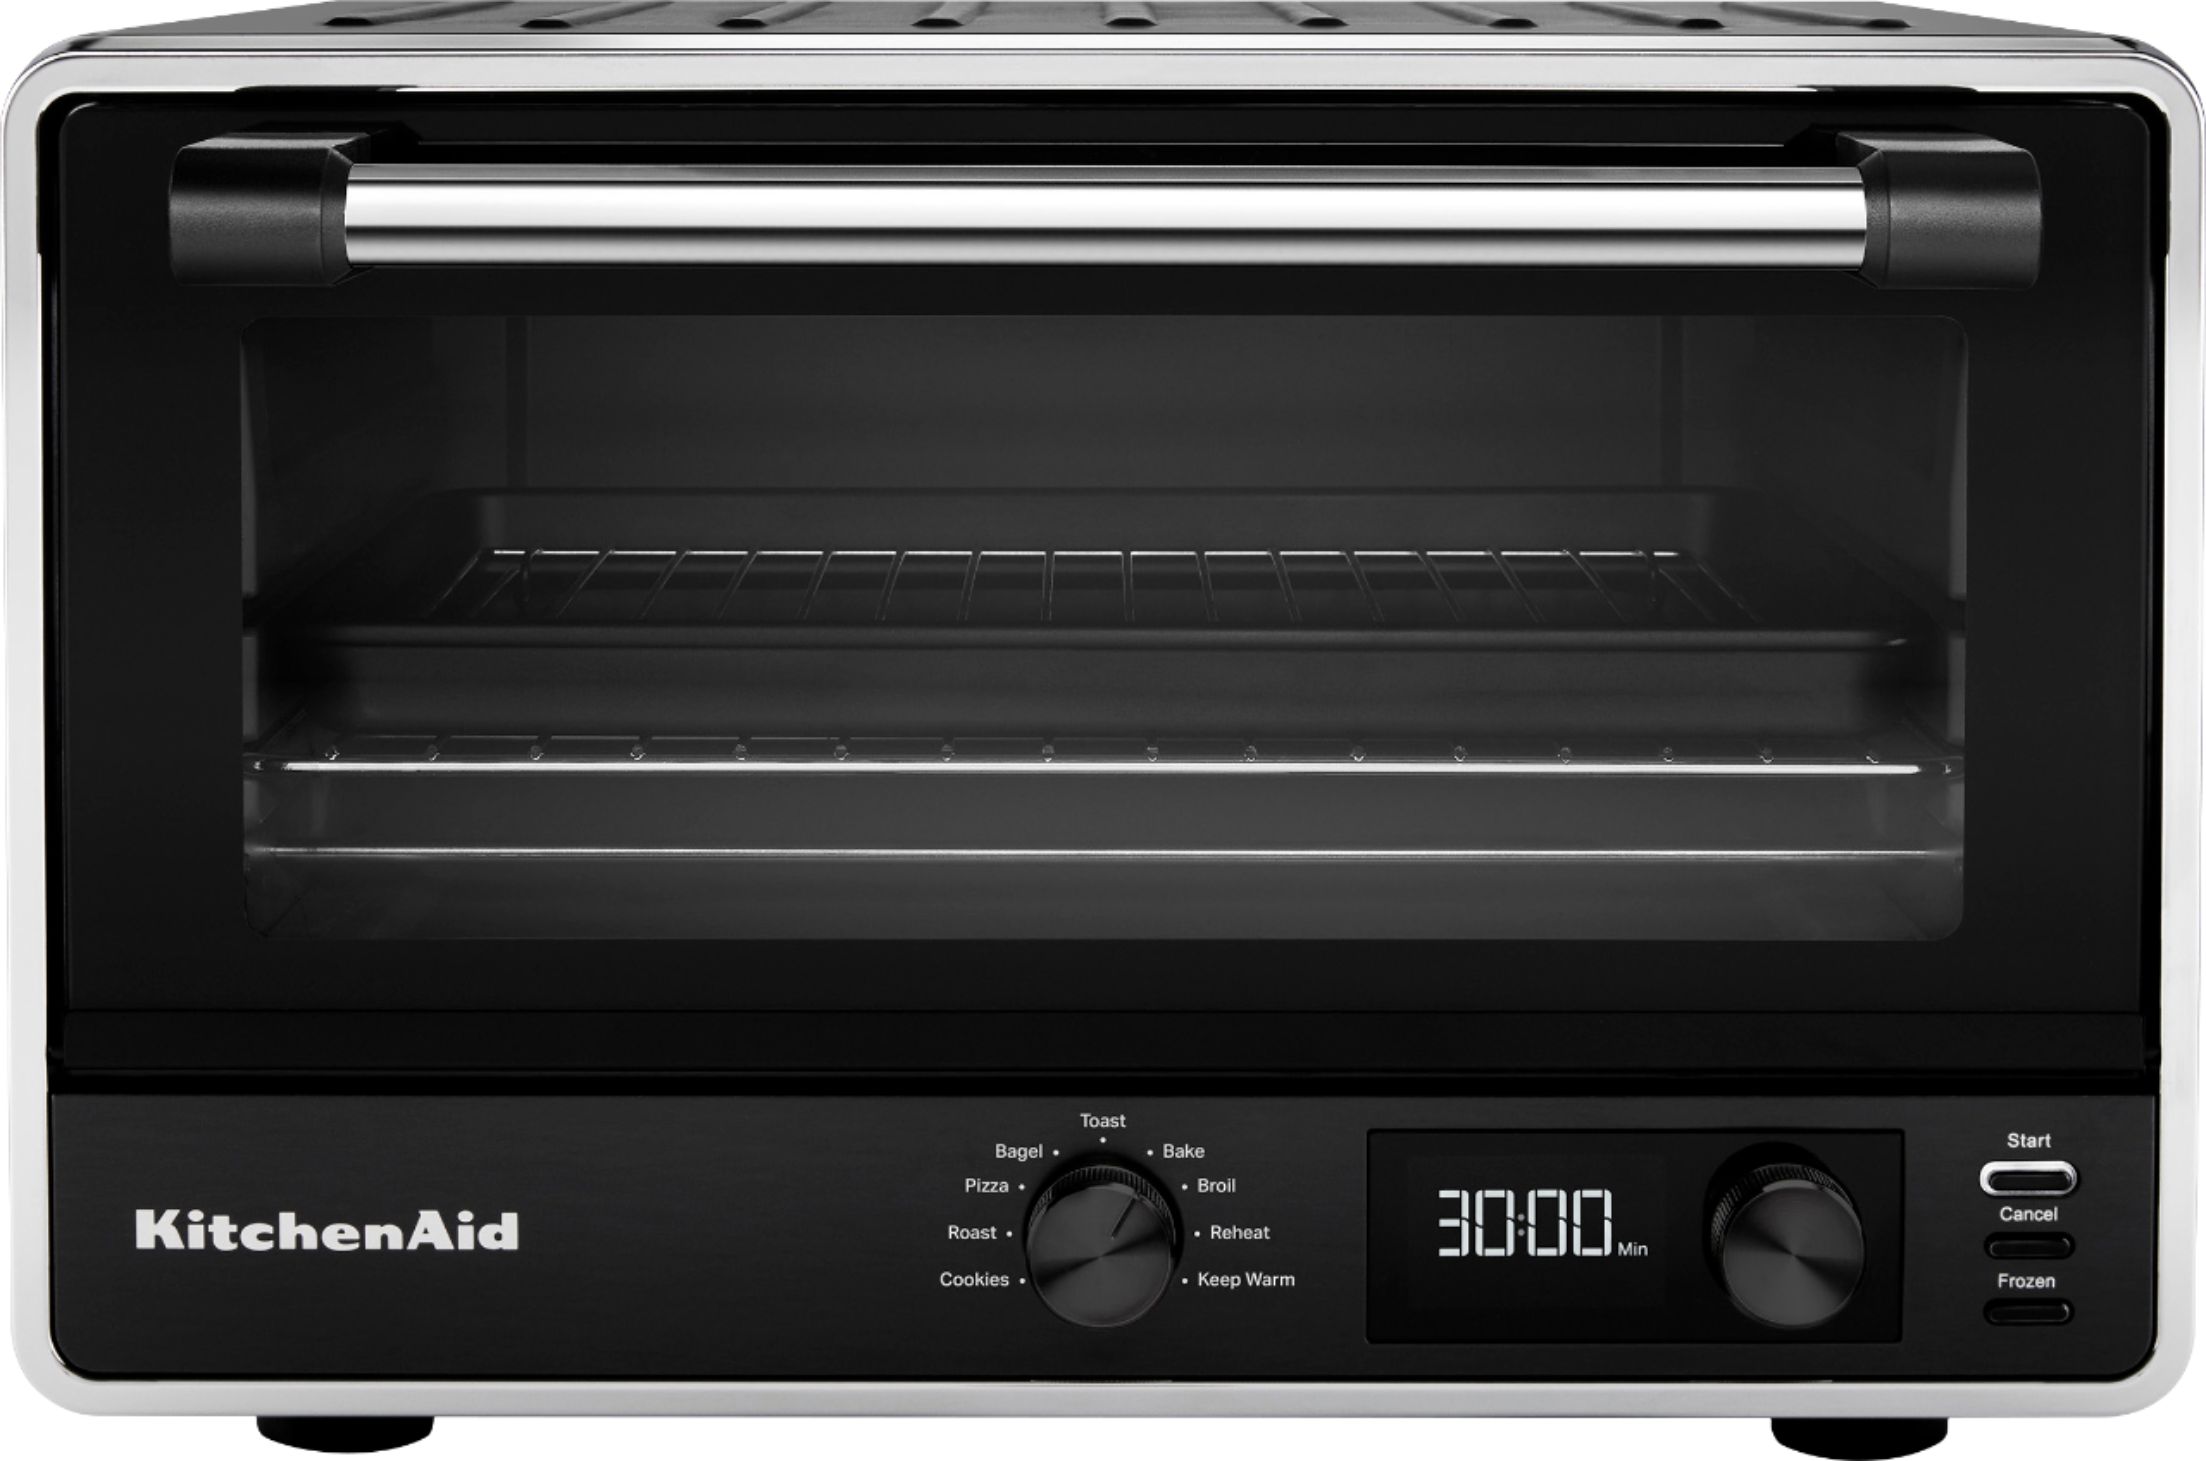 KitchenAid - Digital Countertop Oven